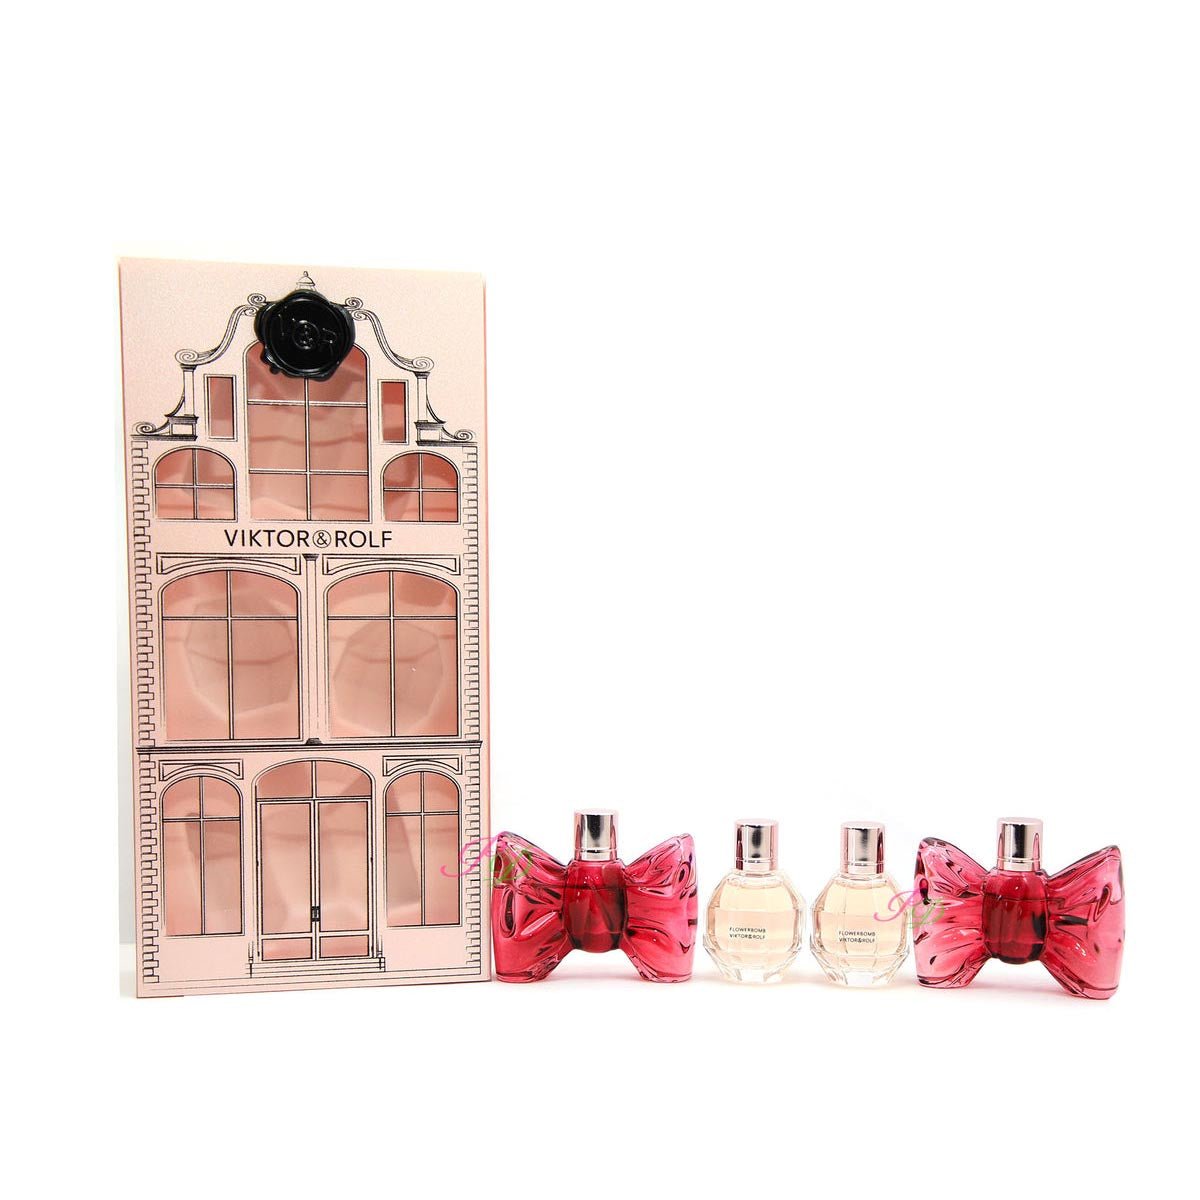 Viktor & Rolf The House Mini Travel Collection | My Perfume Shop Australia